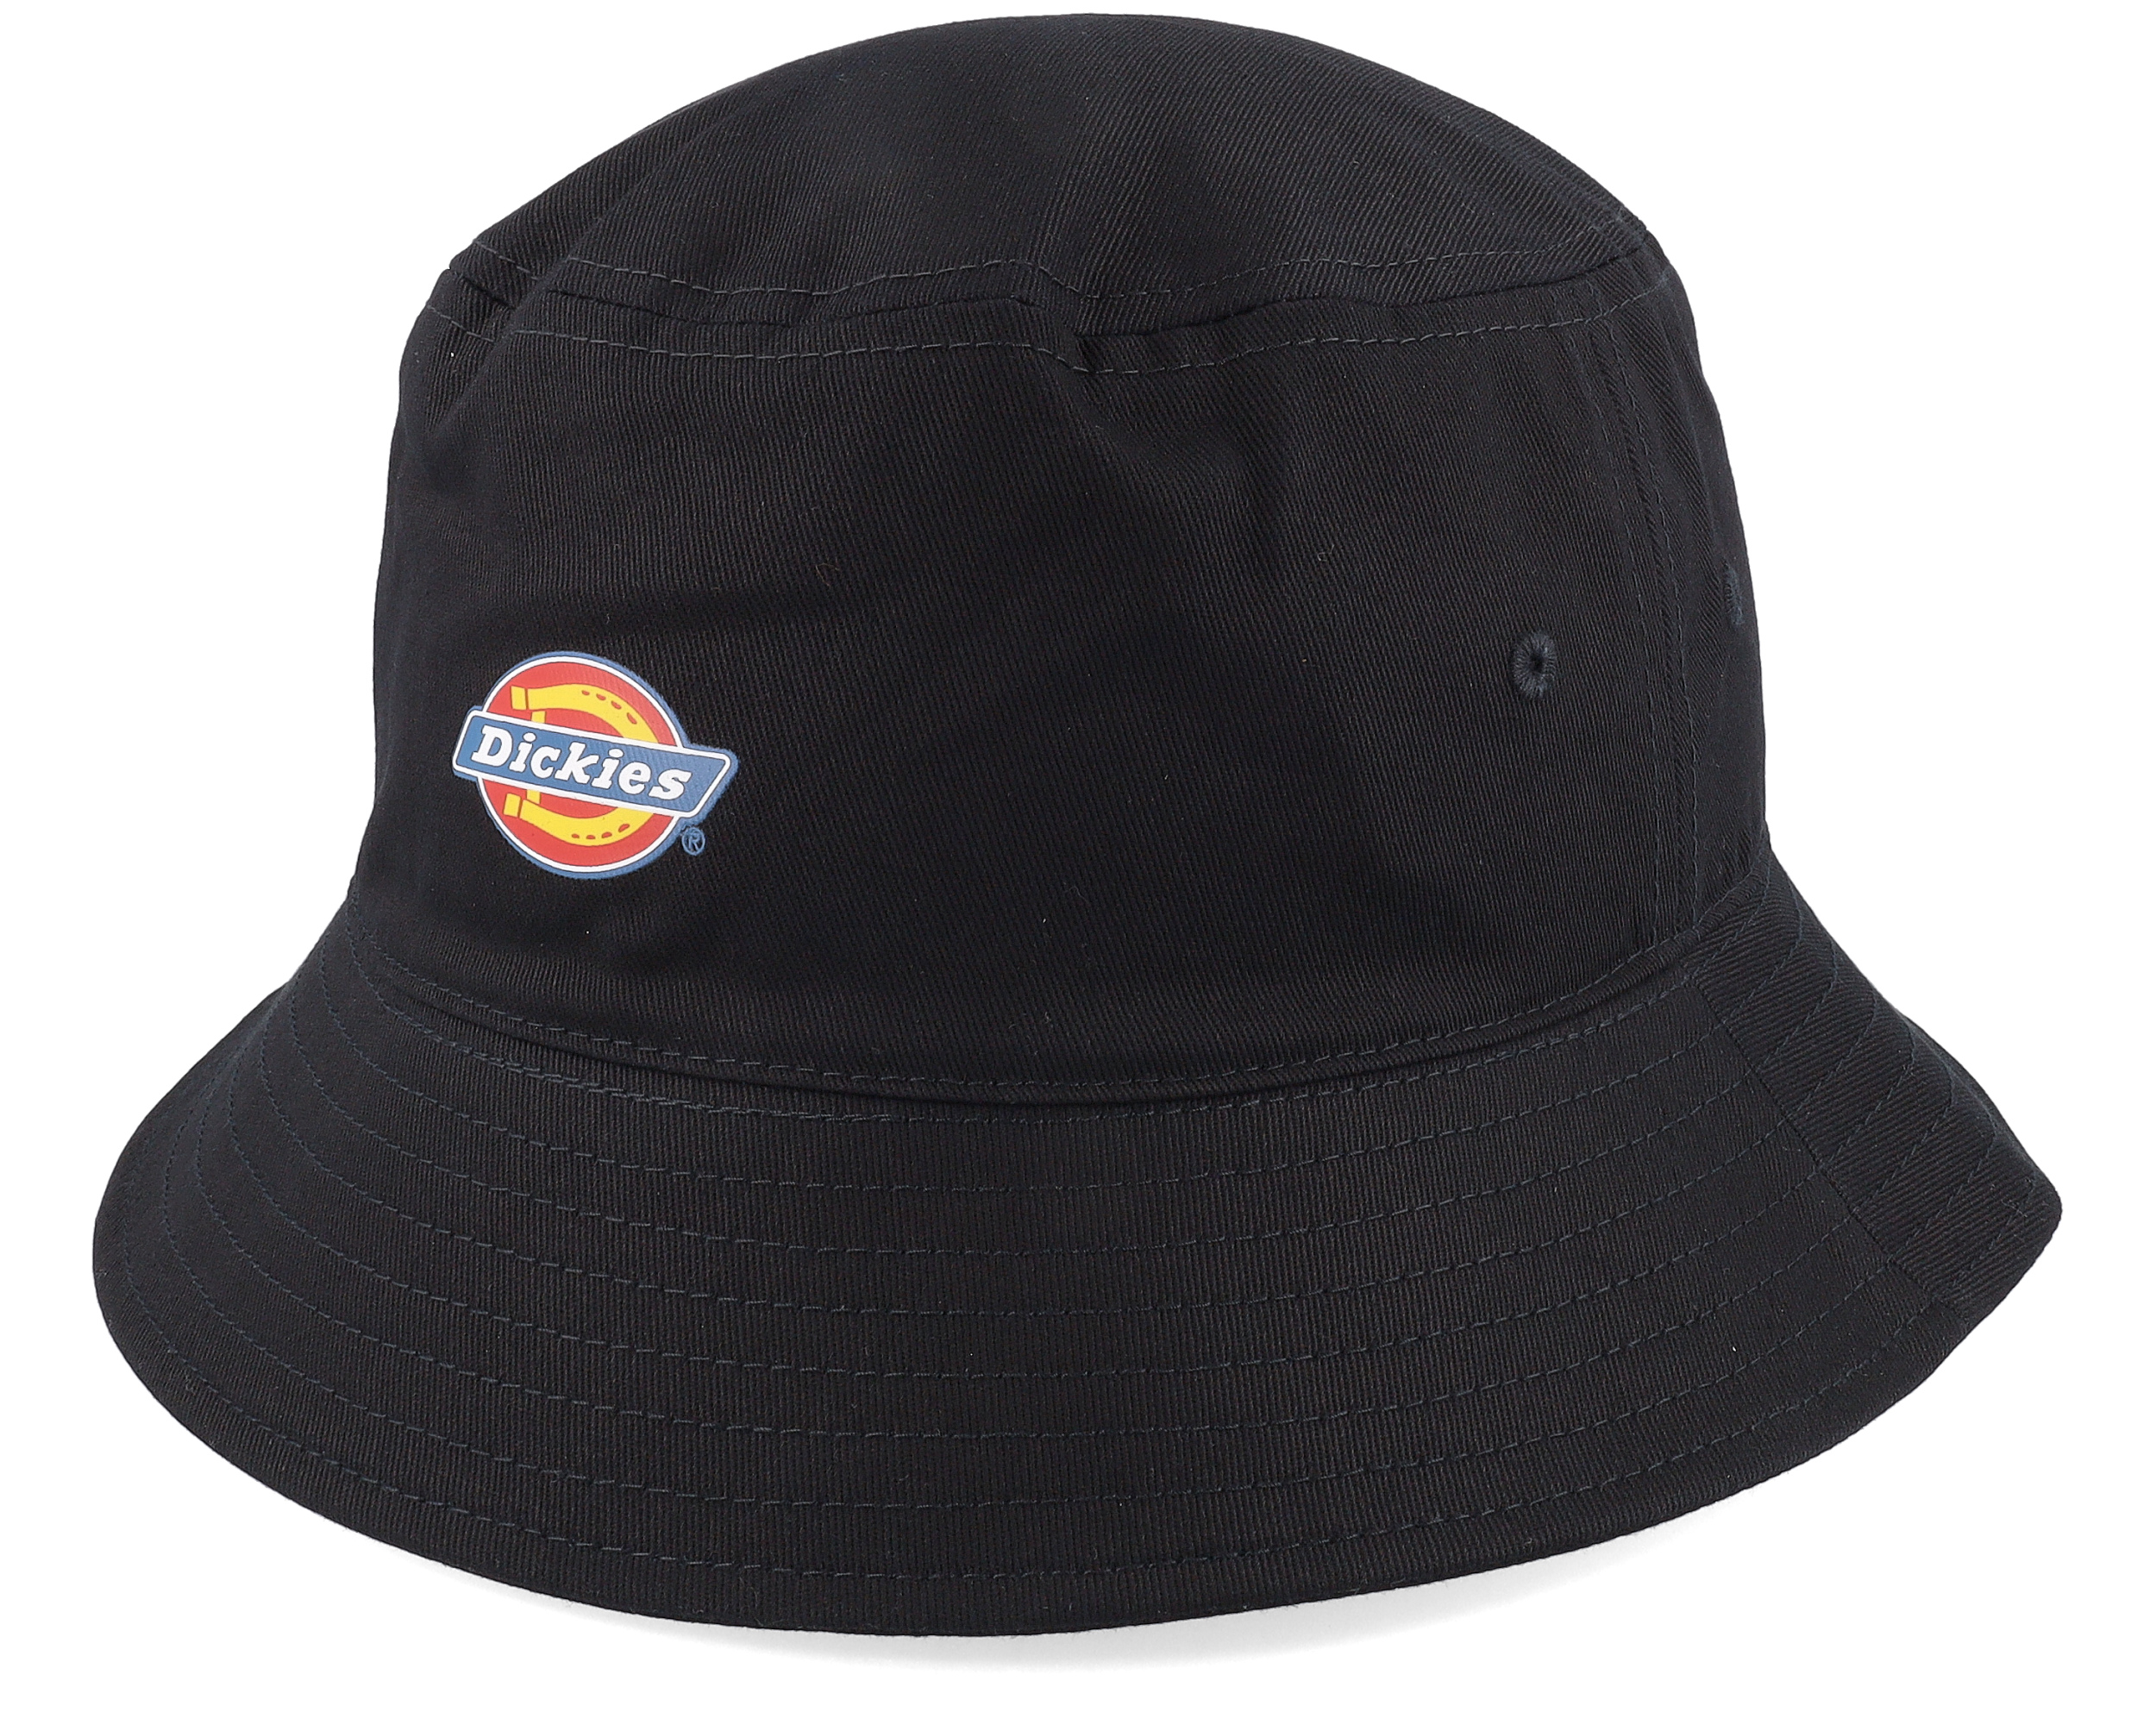 Stayton Black Bucket - Dickies hat | Hatstore.com